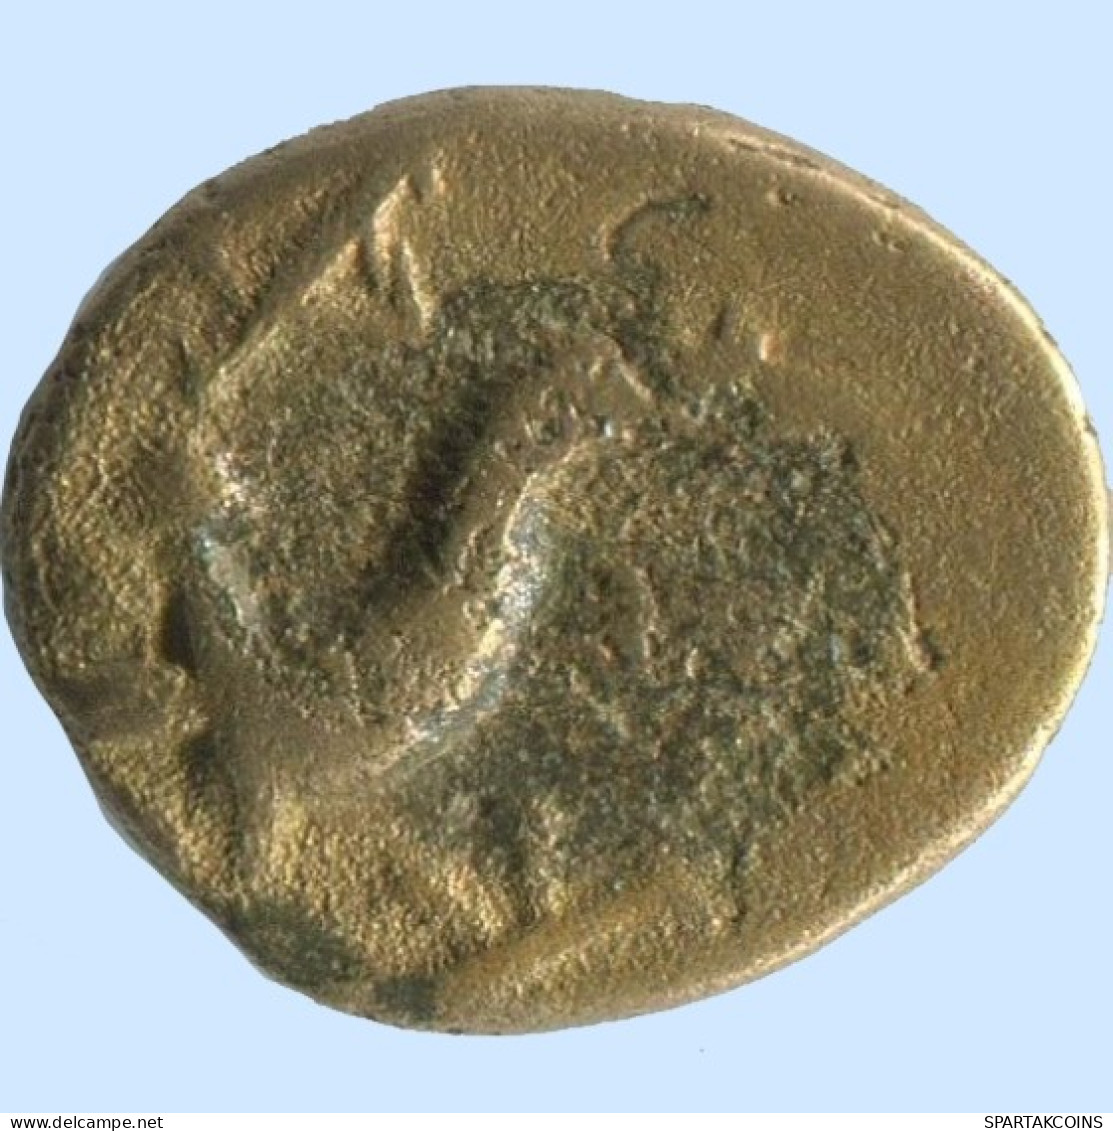 Alexander Cornucopia Bronze Antike GRIECHISCHE Münze 1g/11mm #ANT1710.10.D.A - Griegas